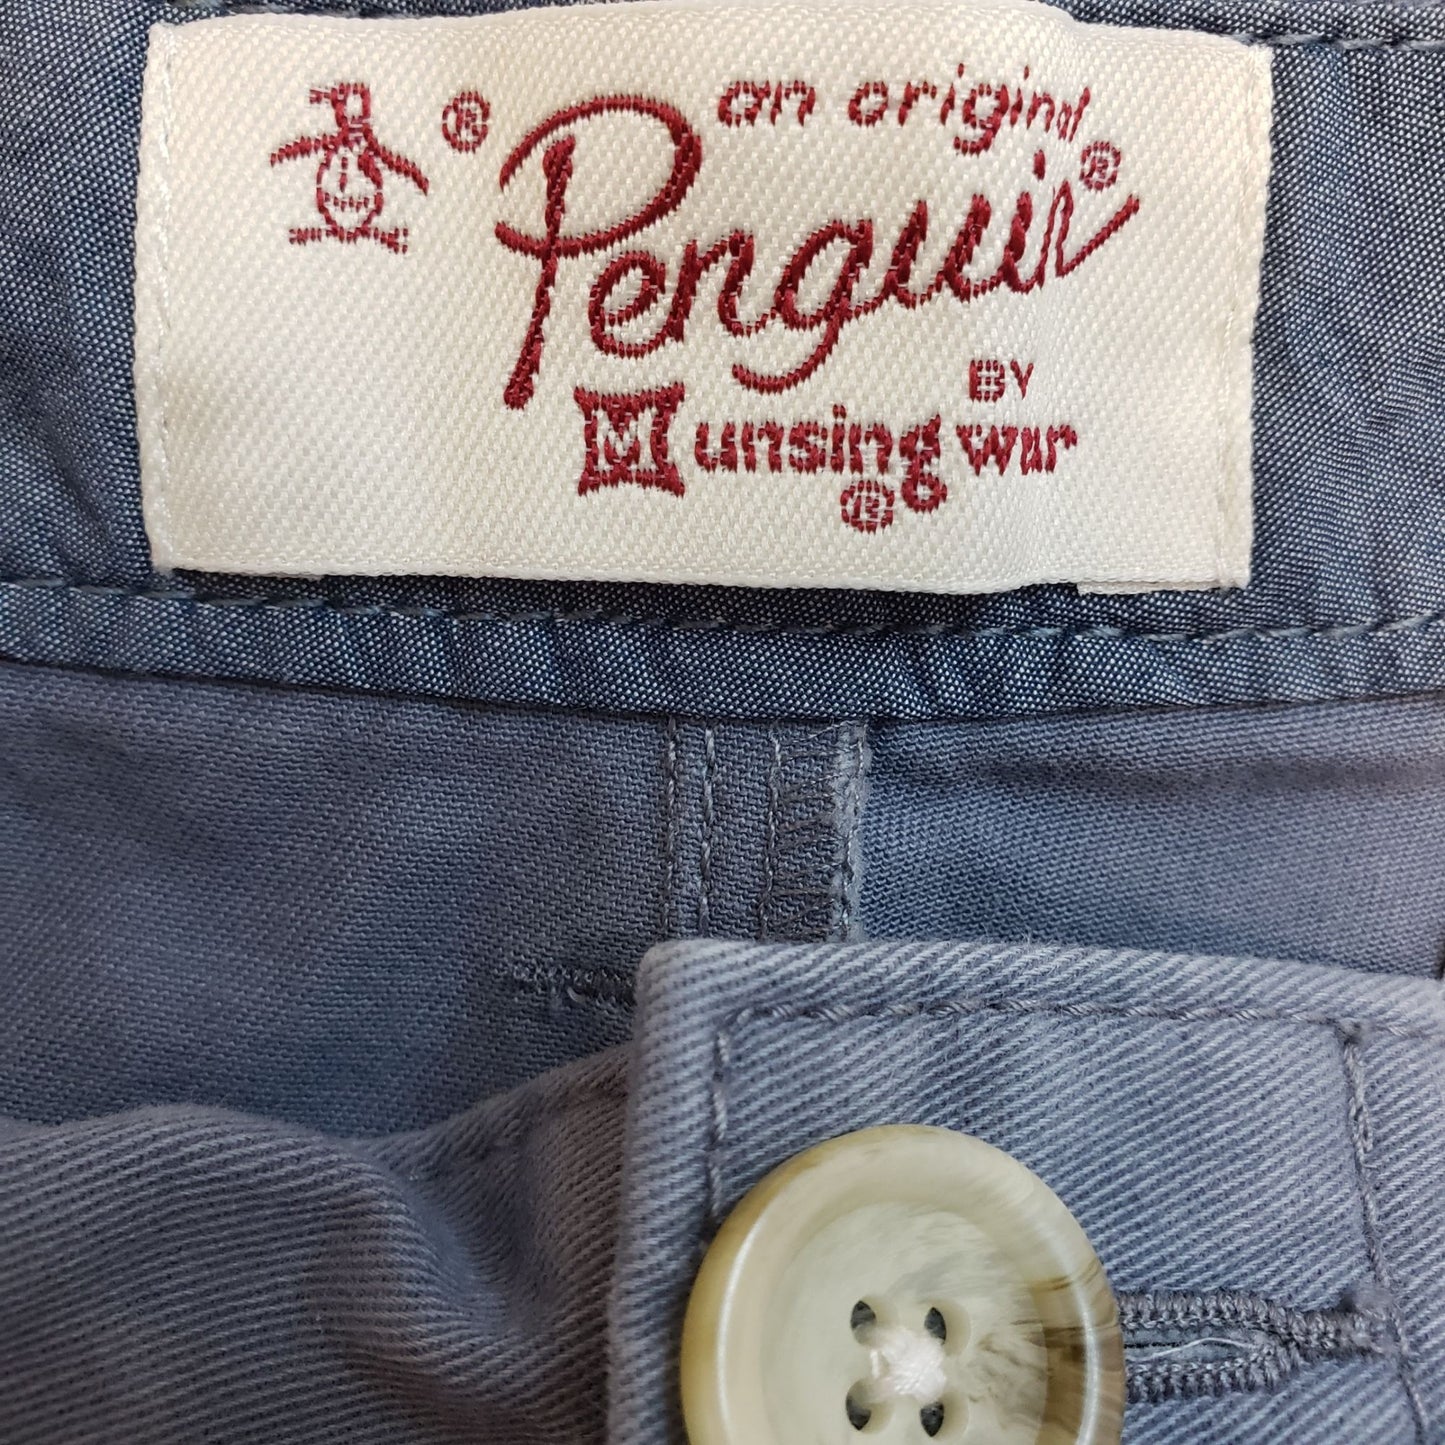 Original Penguin Chino Shorts Size 34